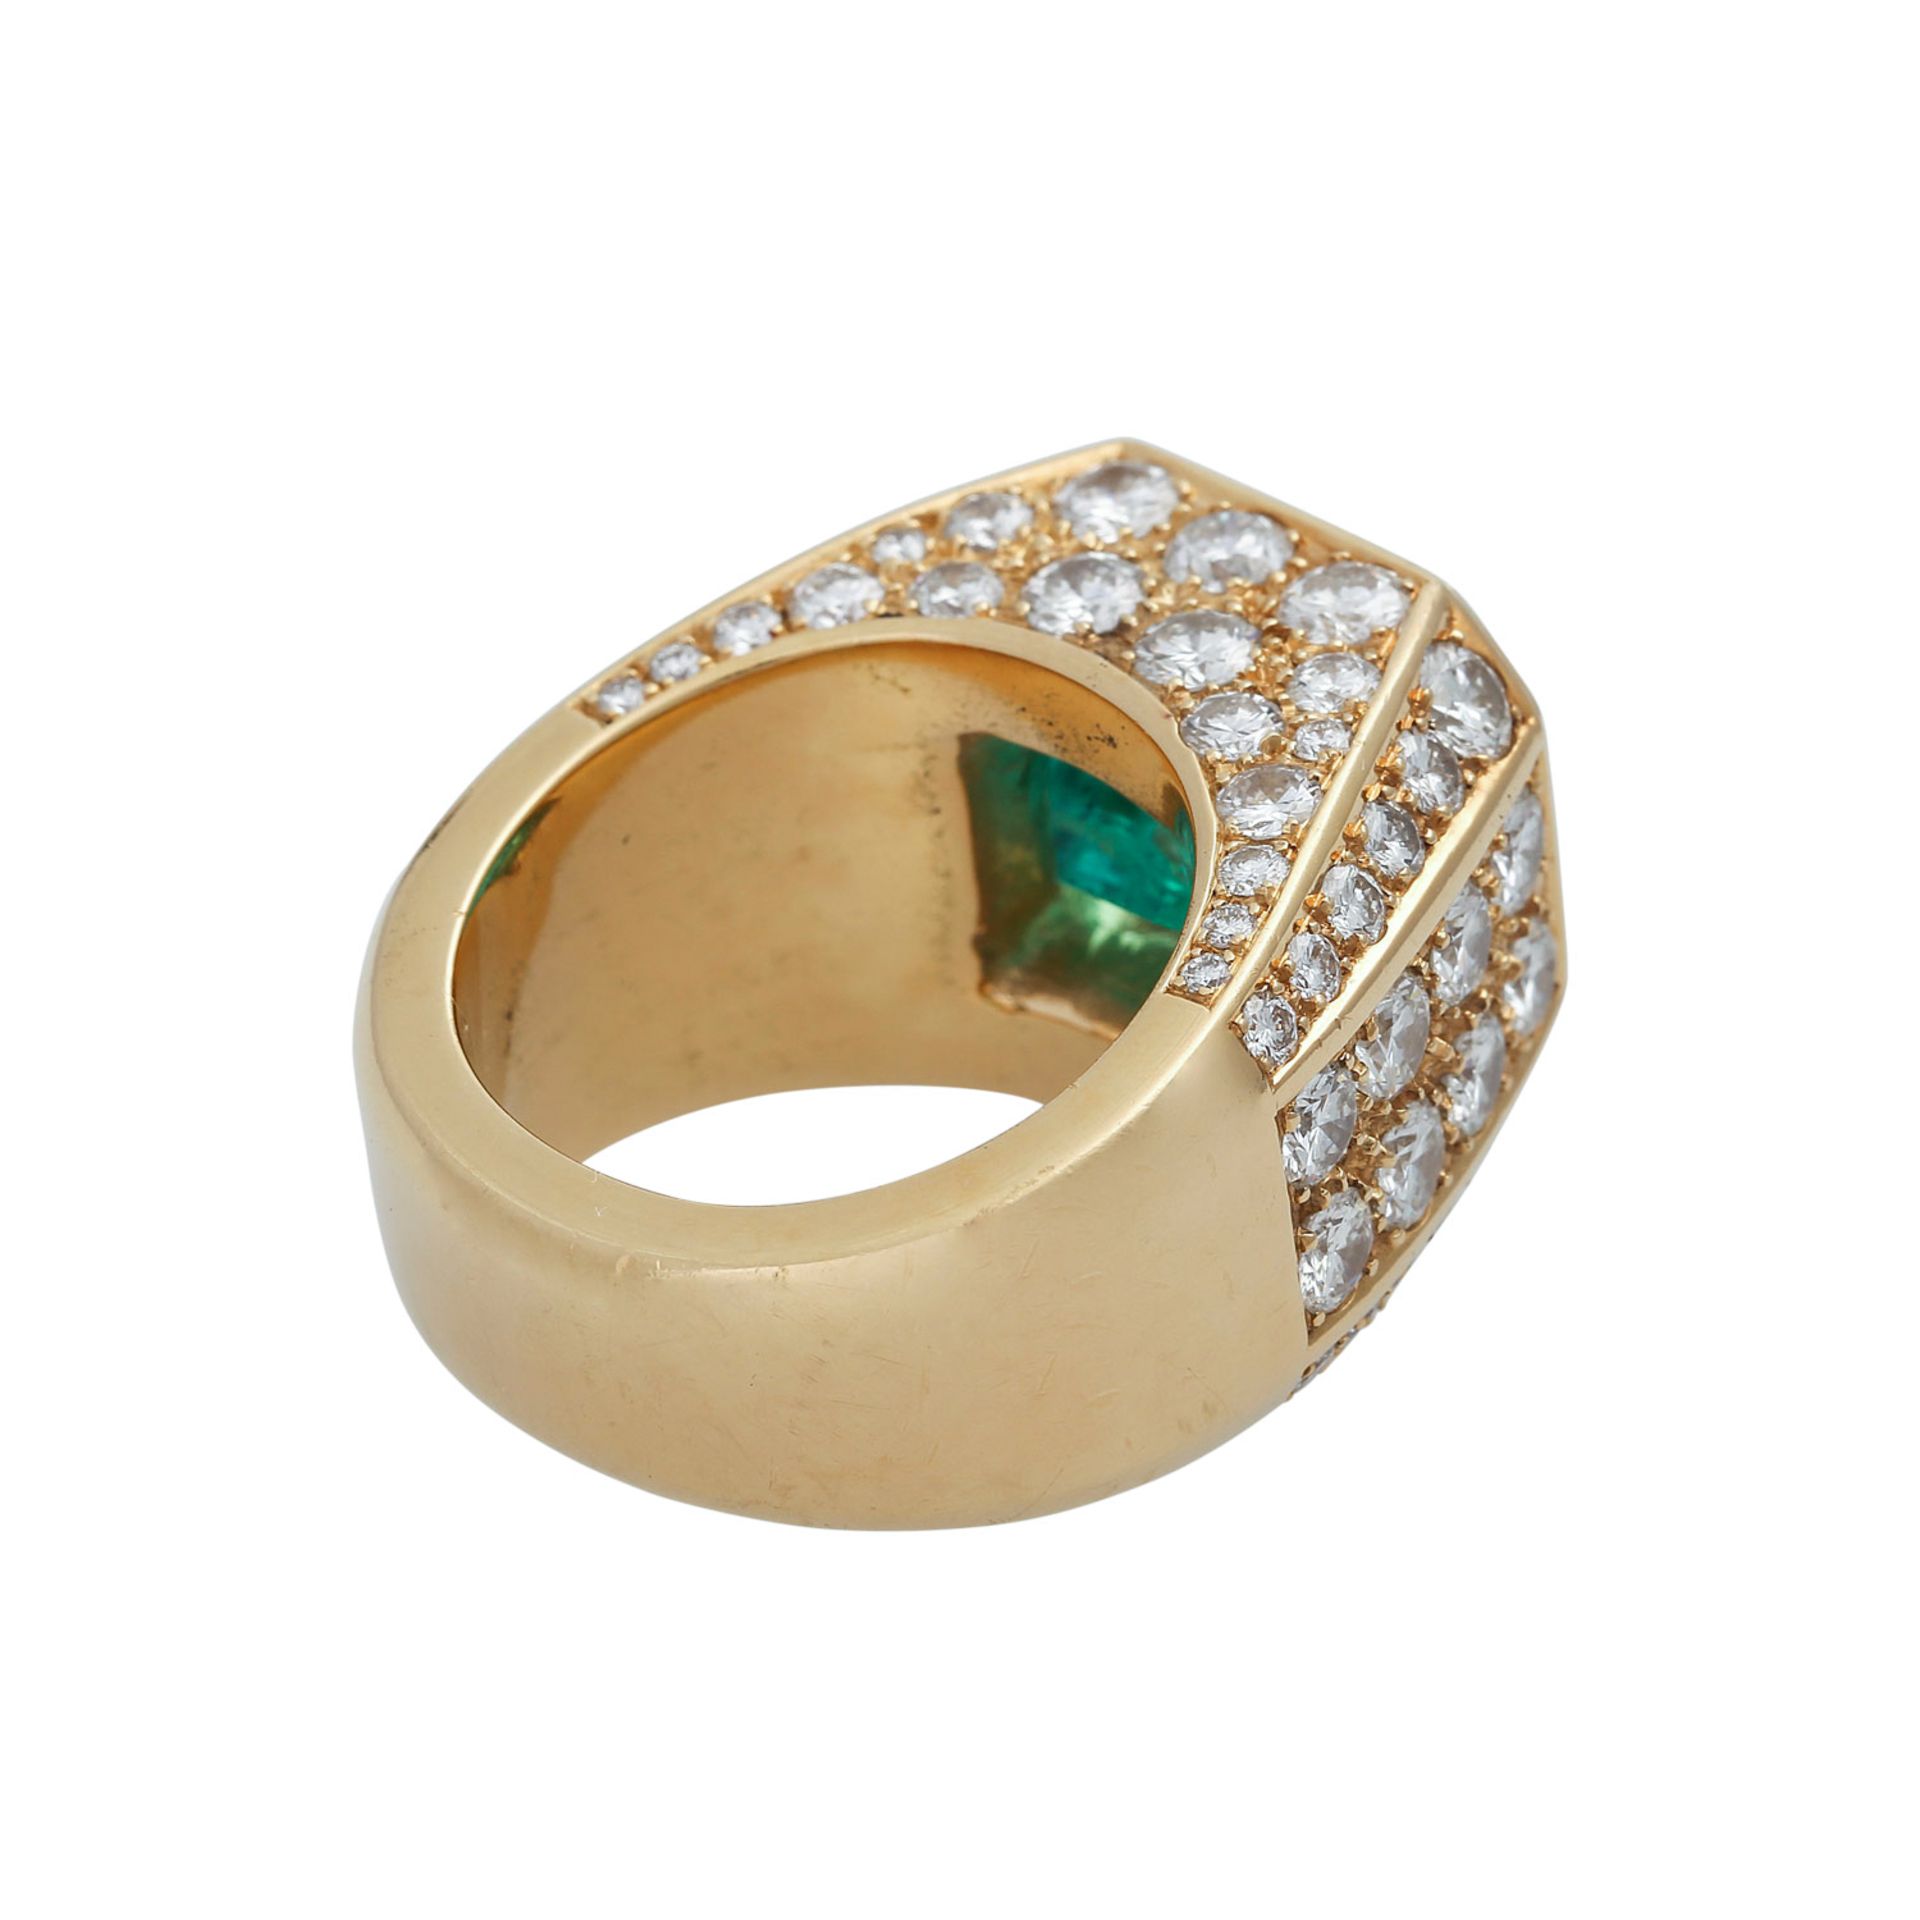 Ring mit Smaragd ca. 12 ct und Brillantenzus. ca. 5 ct WEIß-LGW (H-J)/VS-SI2, GG 18K. RW: ca. 56. - Image 3 of 6